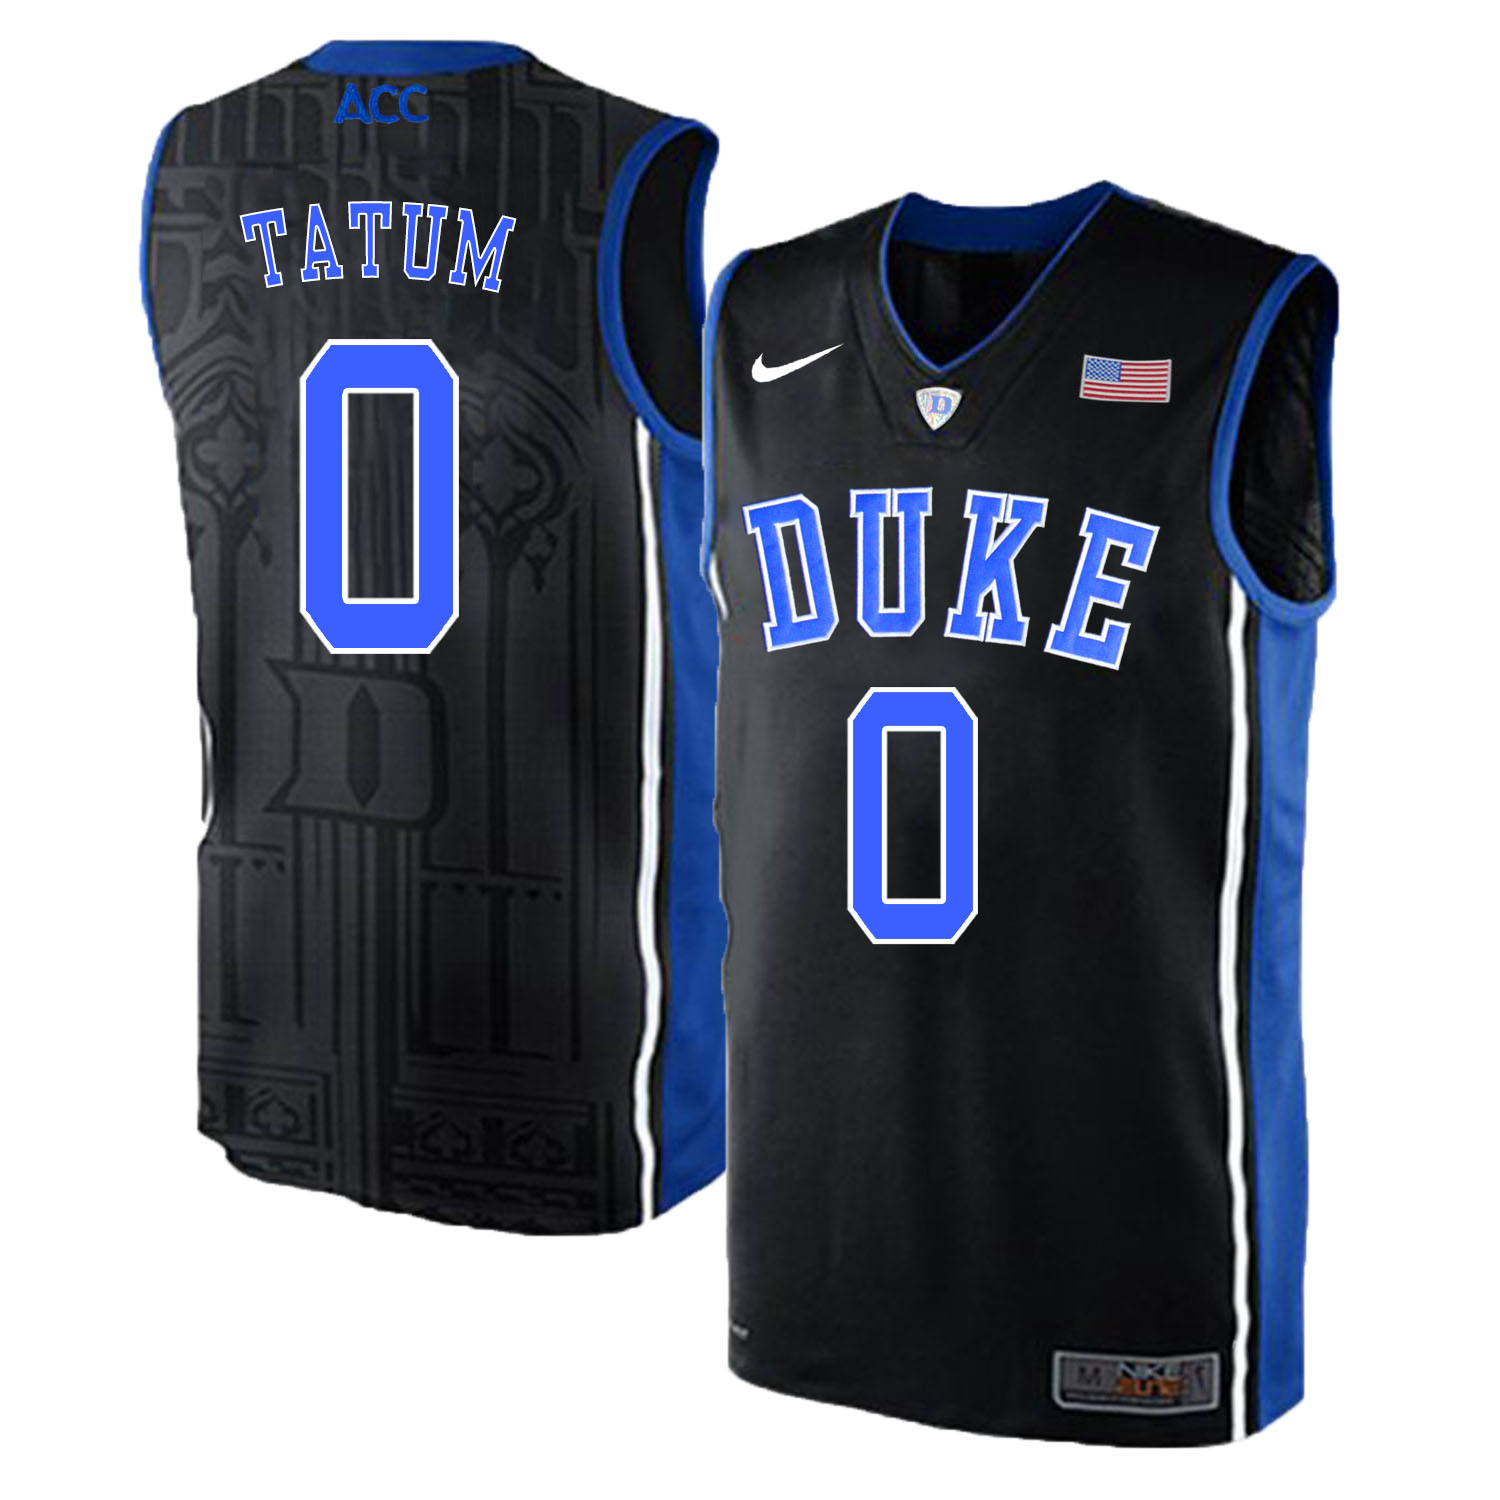 Duke Blue Devils 0 Jayson Tatum Black Elite Nike College Basketball Jersey